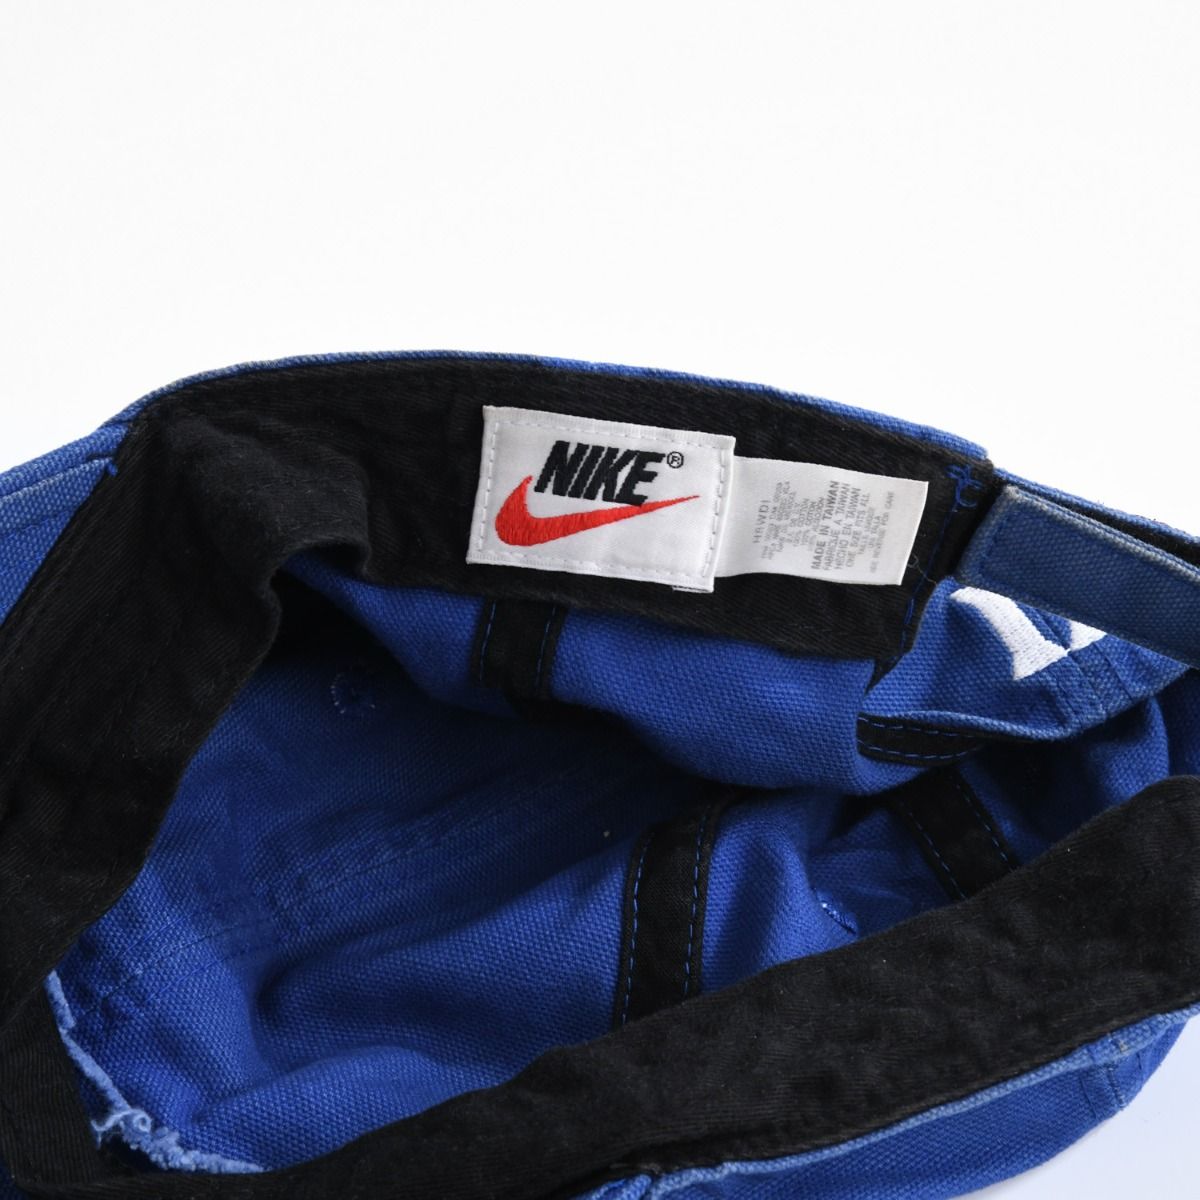 Nike X Blue Devils 1990s Baseball Cap